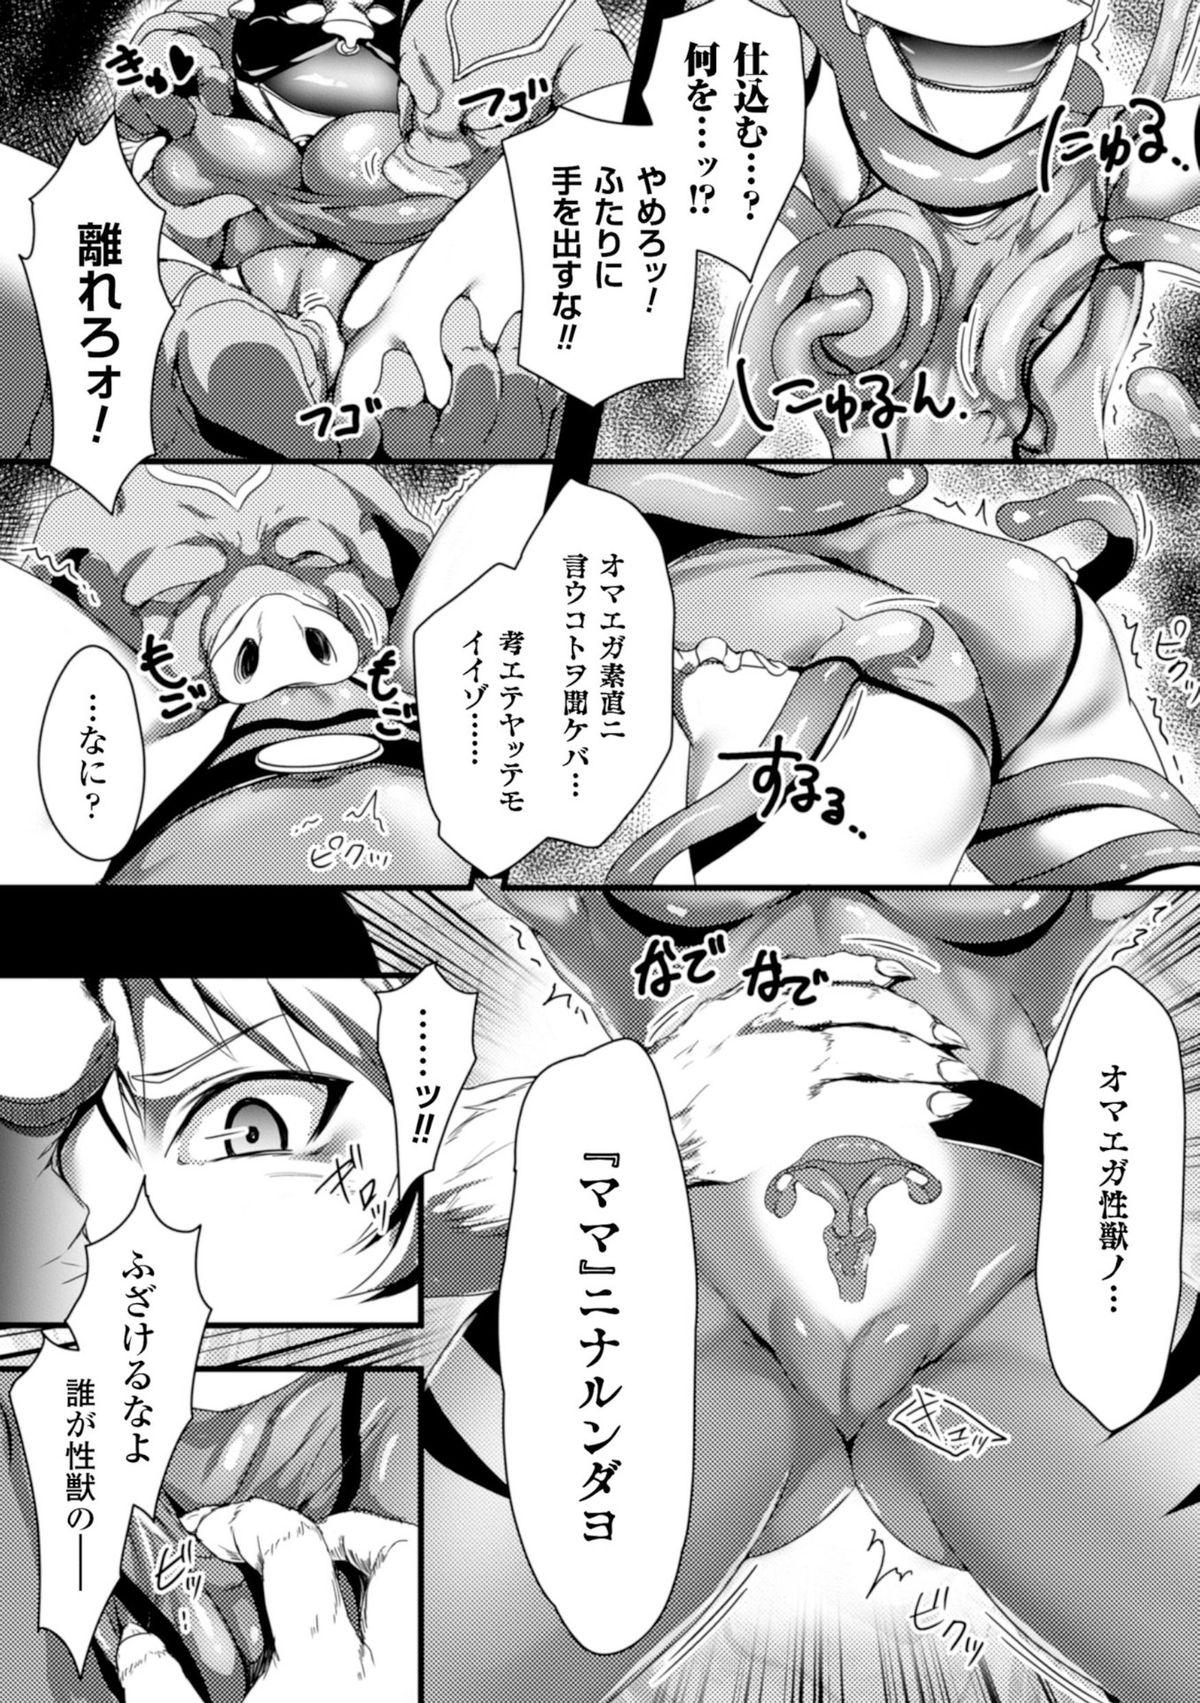 Suckingcock Seigi no Heroine Kachiku Bokujou Vol. 1 Argenta - Page 6